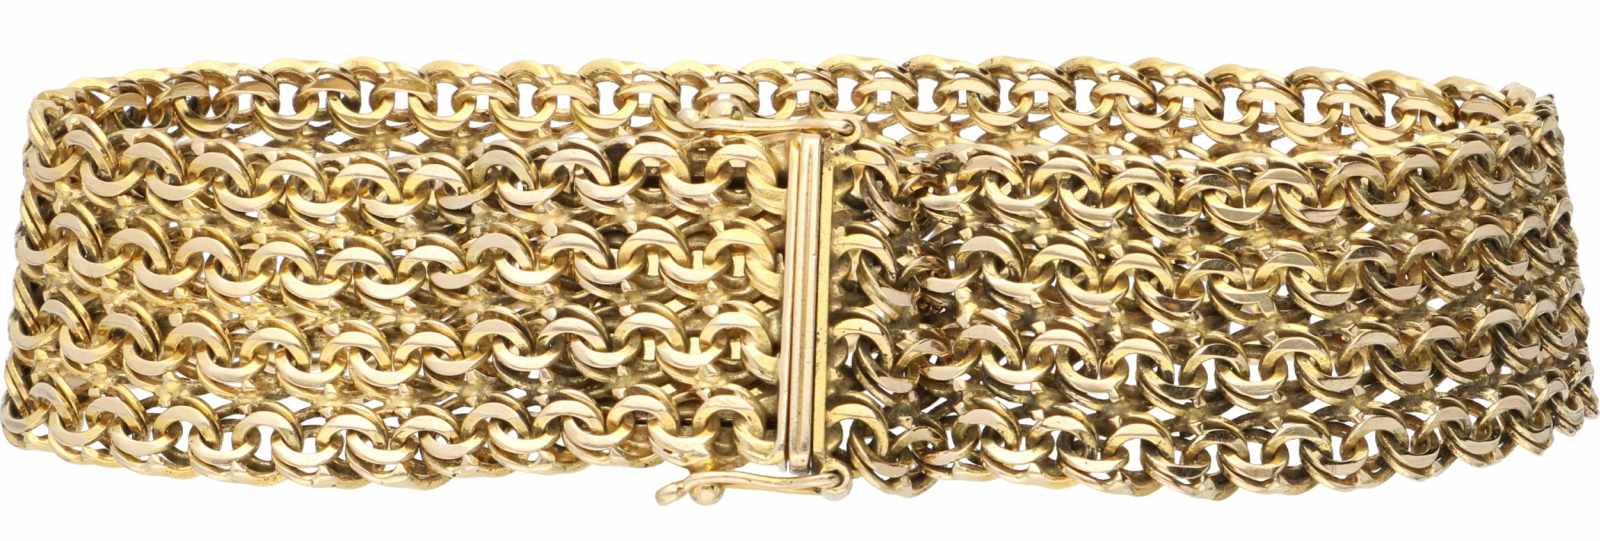 Bracelet/ earrings yellow gold - 14 ct. - Image 4 of 4